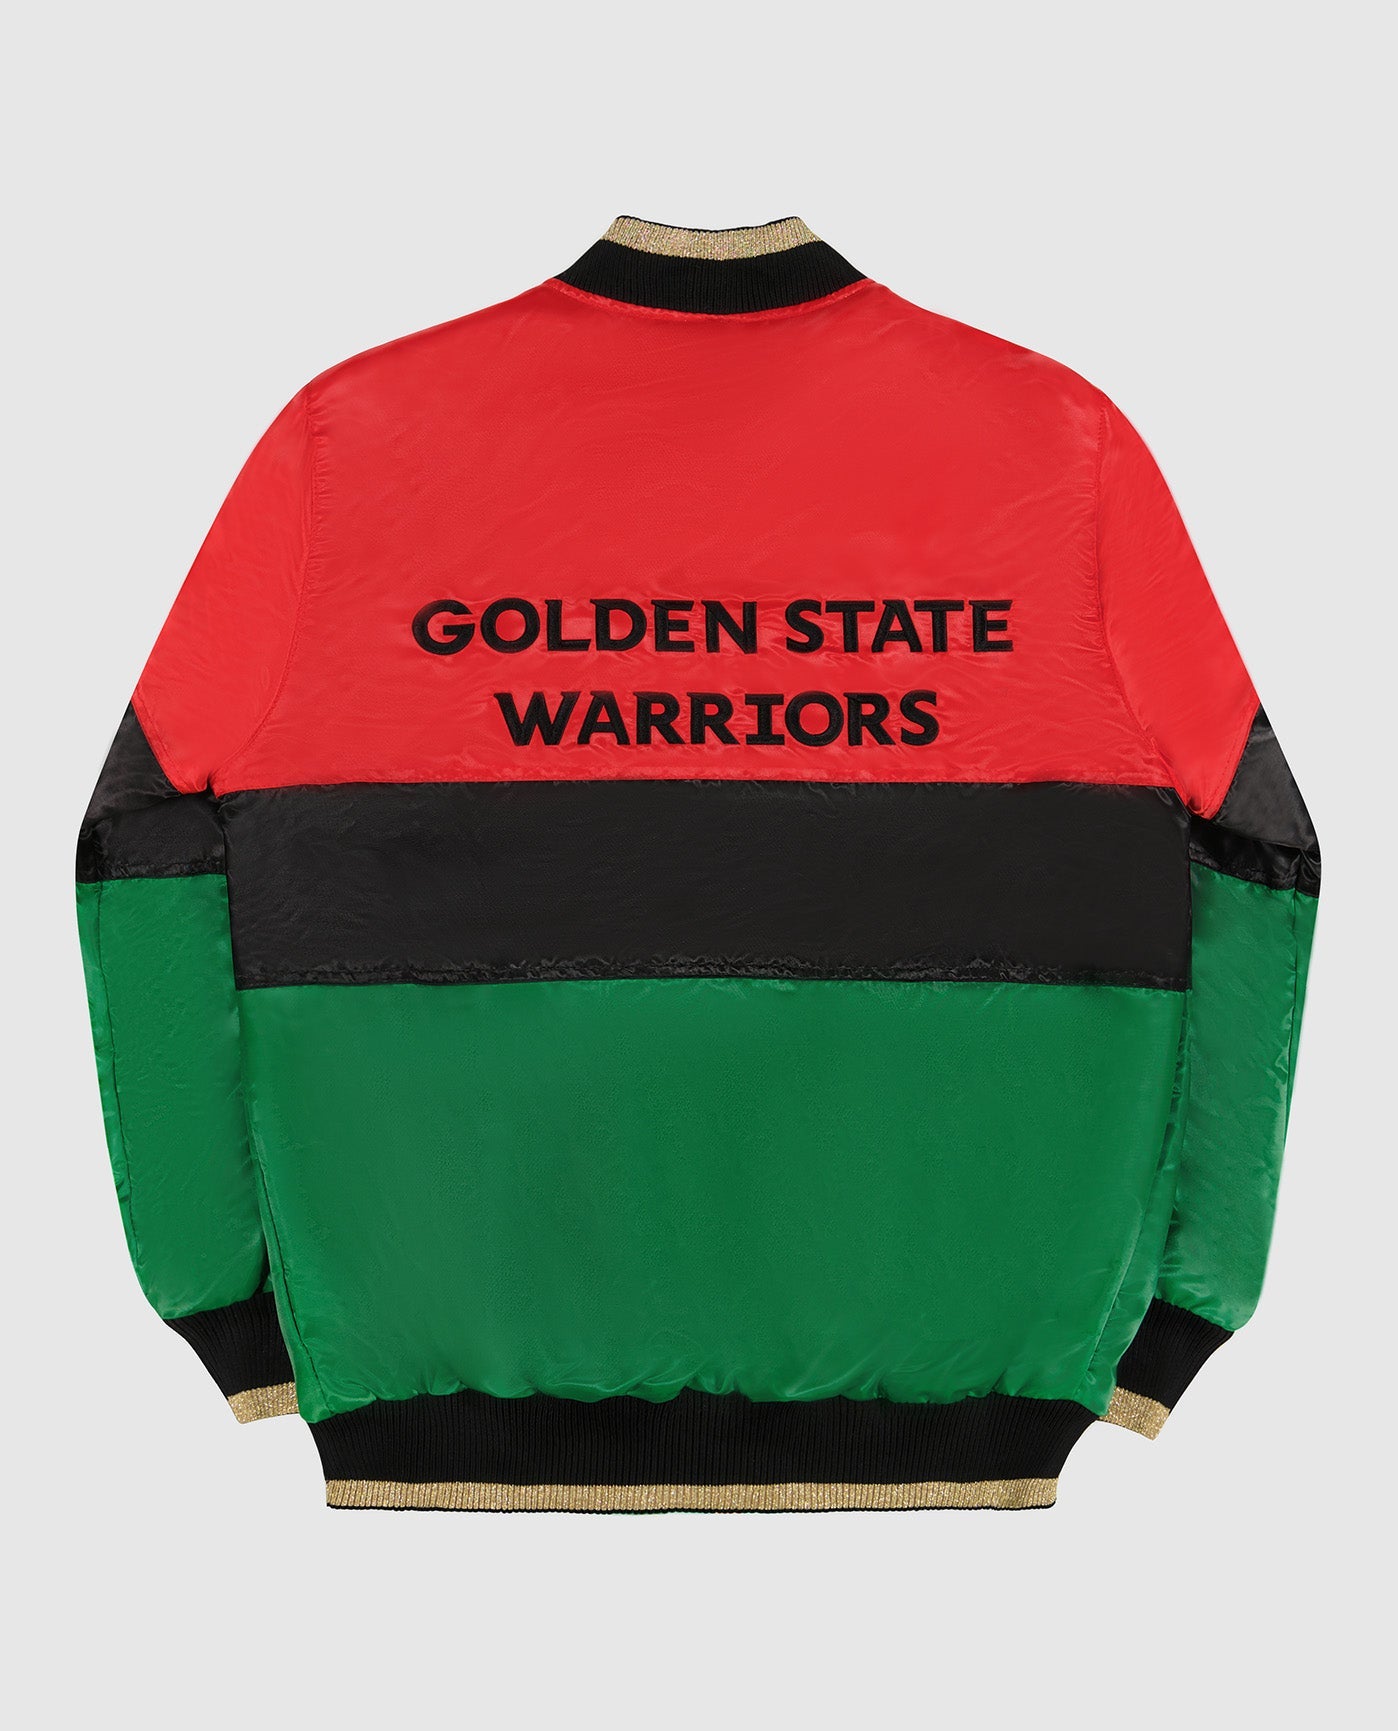 Starter Ty Mopkins Black History Month Golden State Warriors Full-Zip Jacket L / Warriors Red Black Green Mens Outerwear